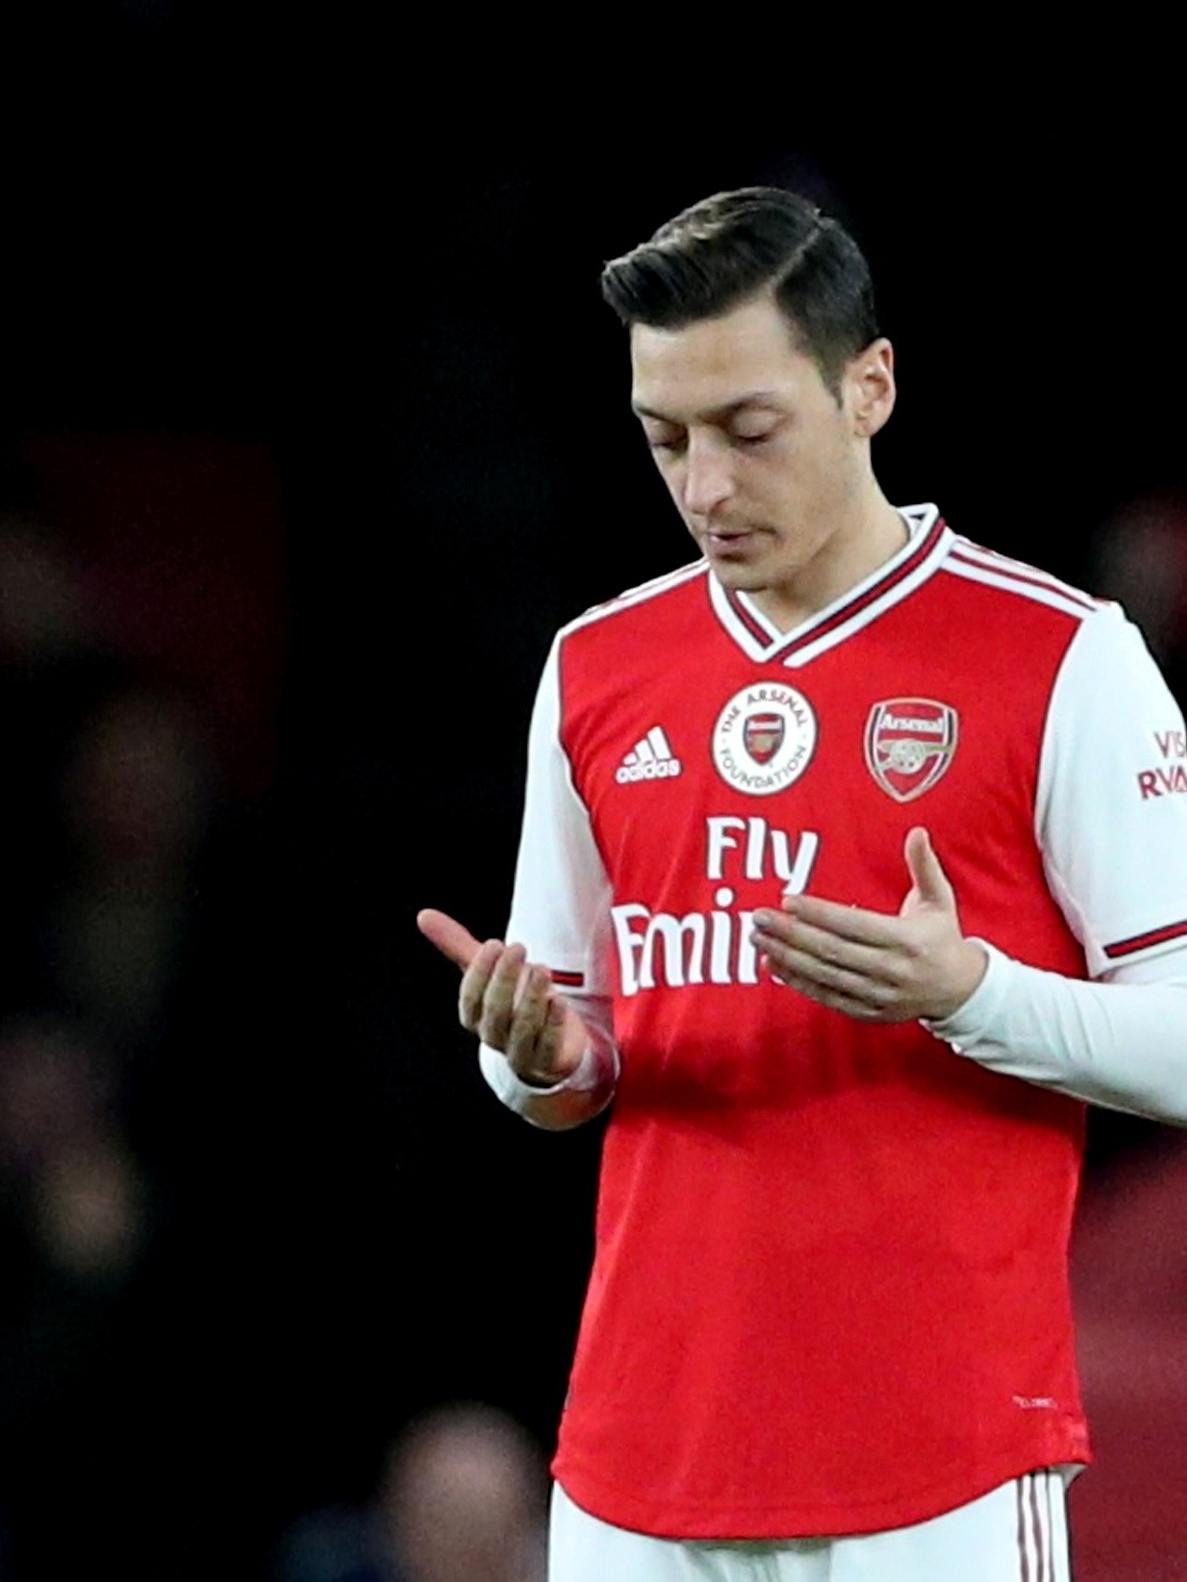 Arsenal entrega Premier League de bandeja ao City - Passaporte da Bola -  Folha PE